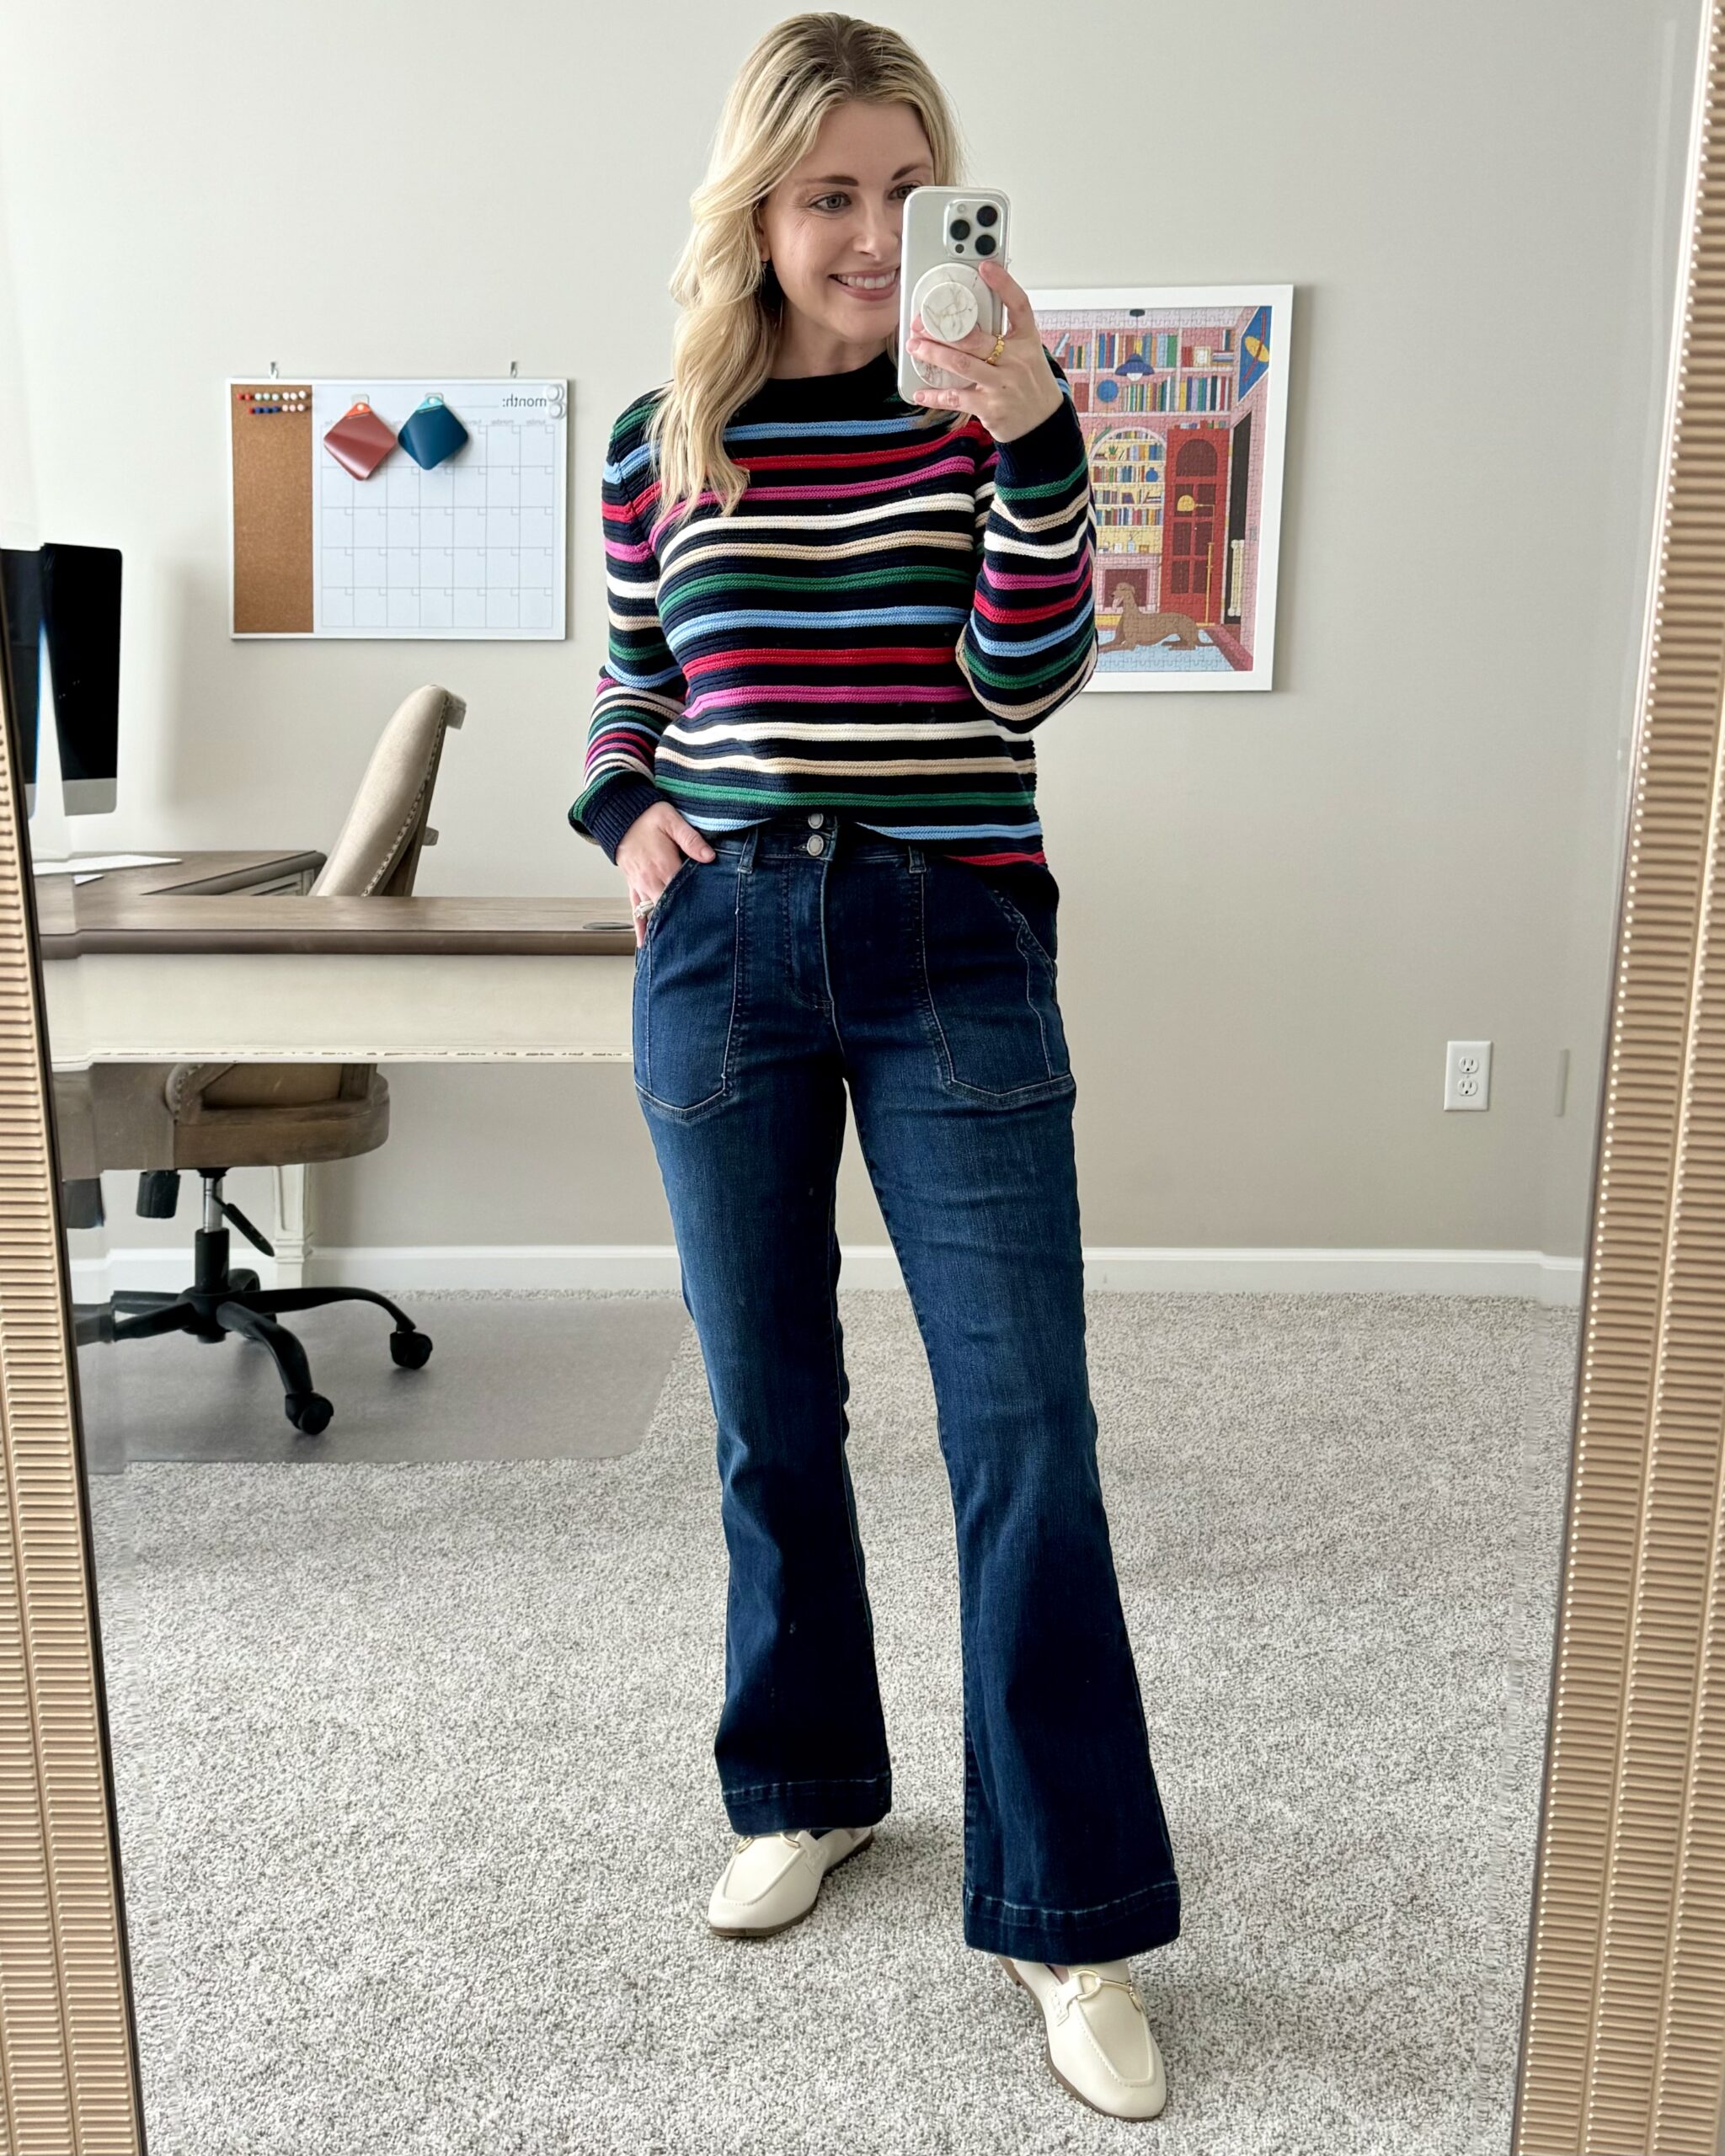 LOFT striped sweater, Wit & Wisdom jeans